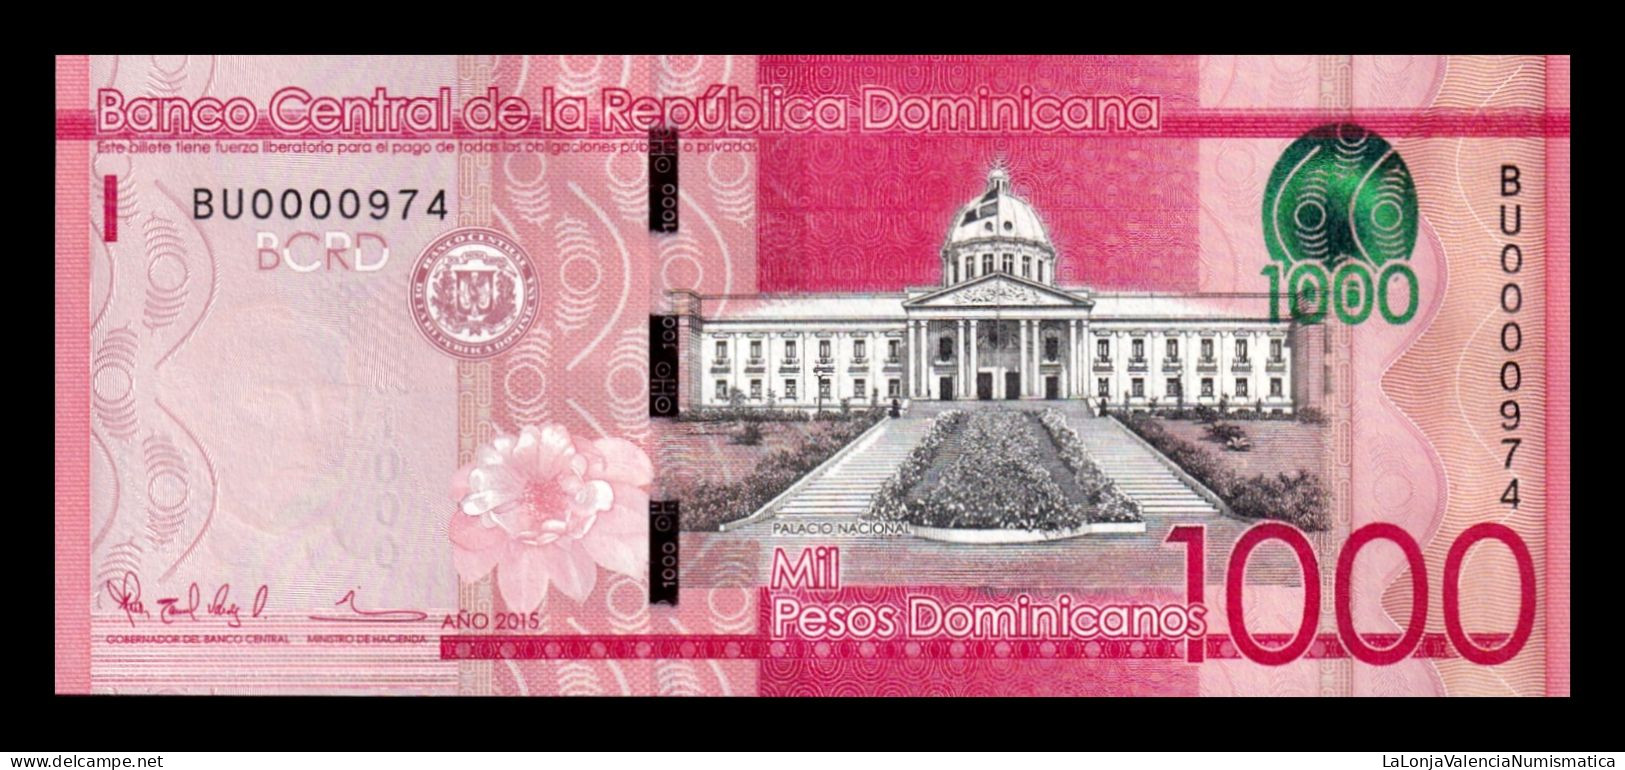 República Dominicana 1000 Pesos Dominicanos 2015 Pick 193b Low Serial 974 Sc Unc - República Dominicana